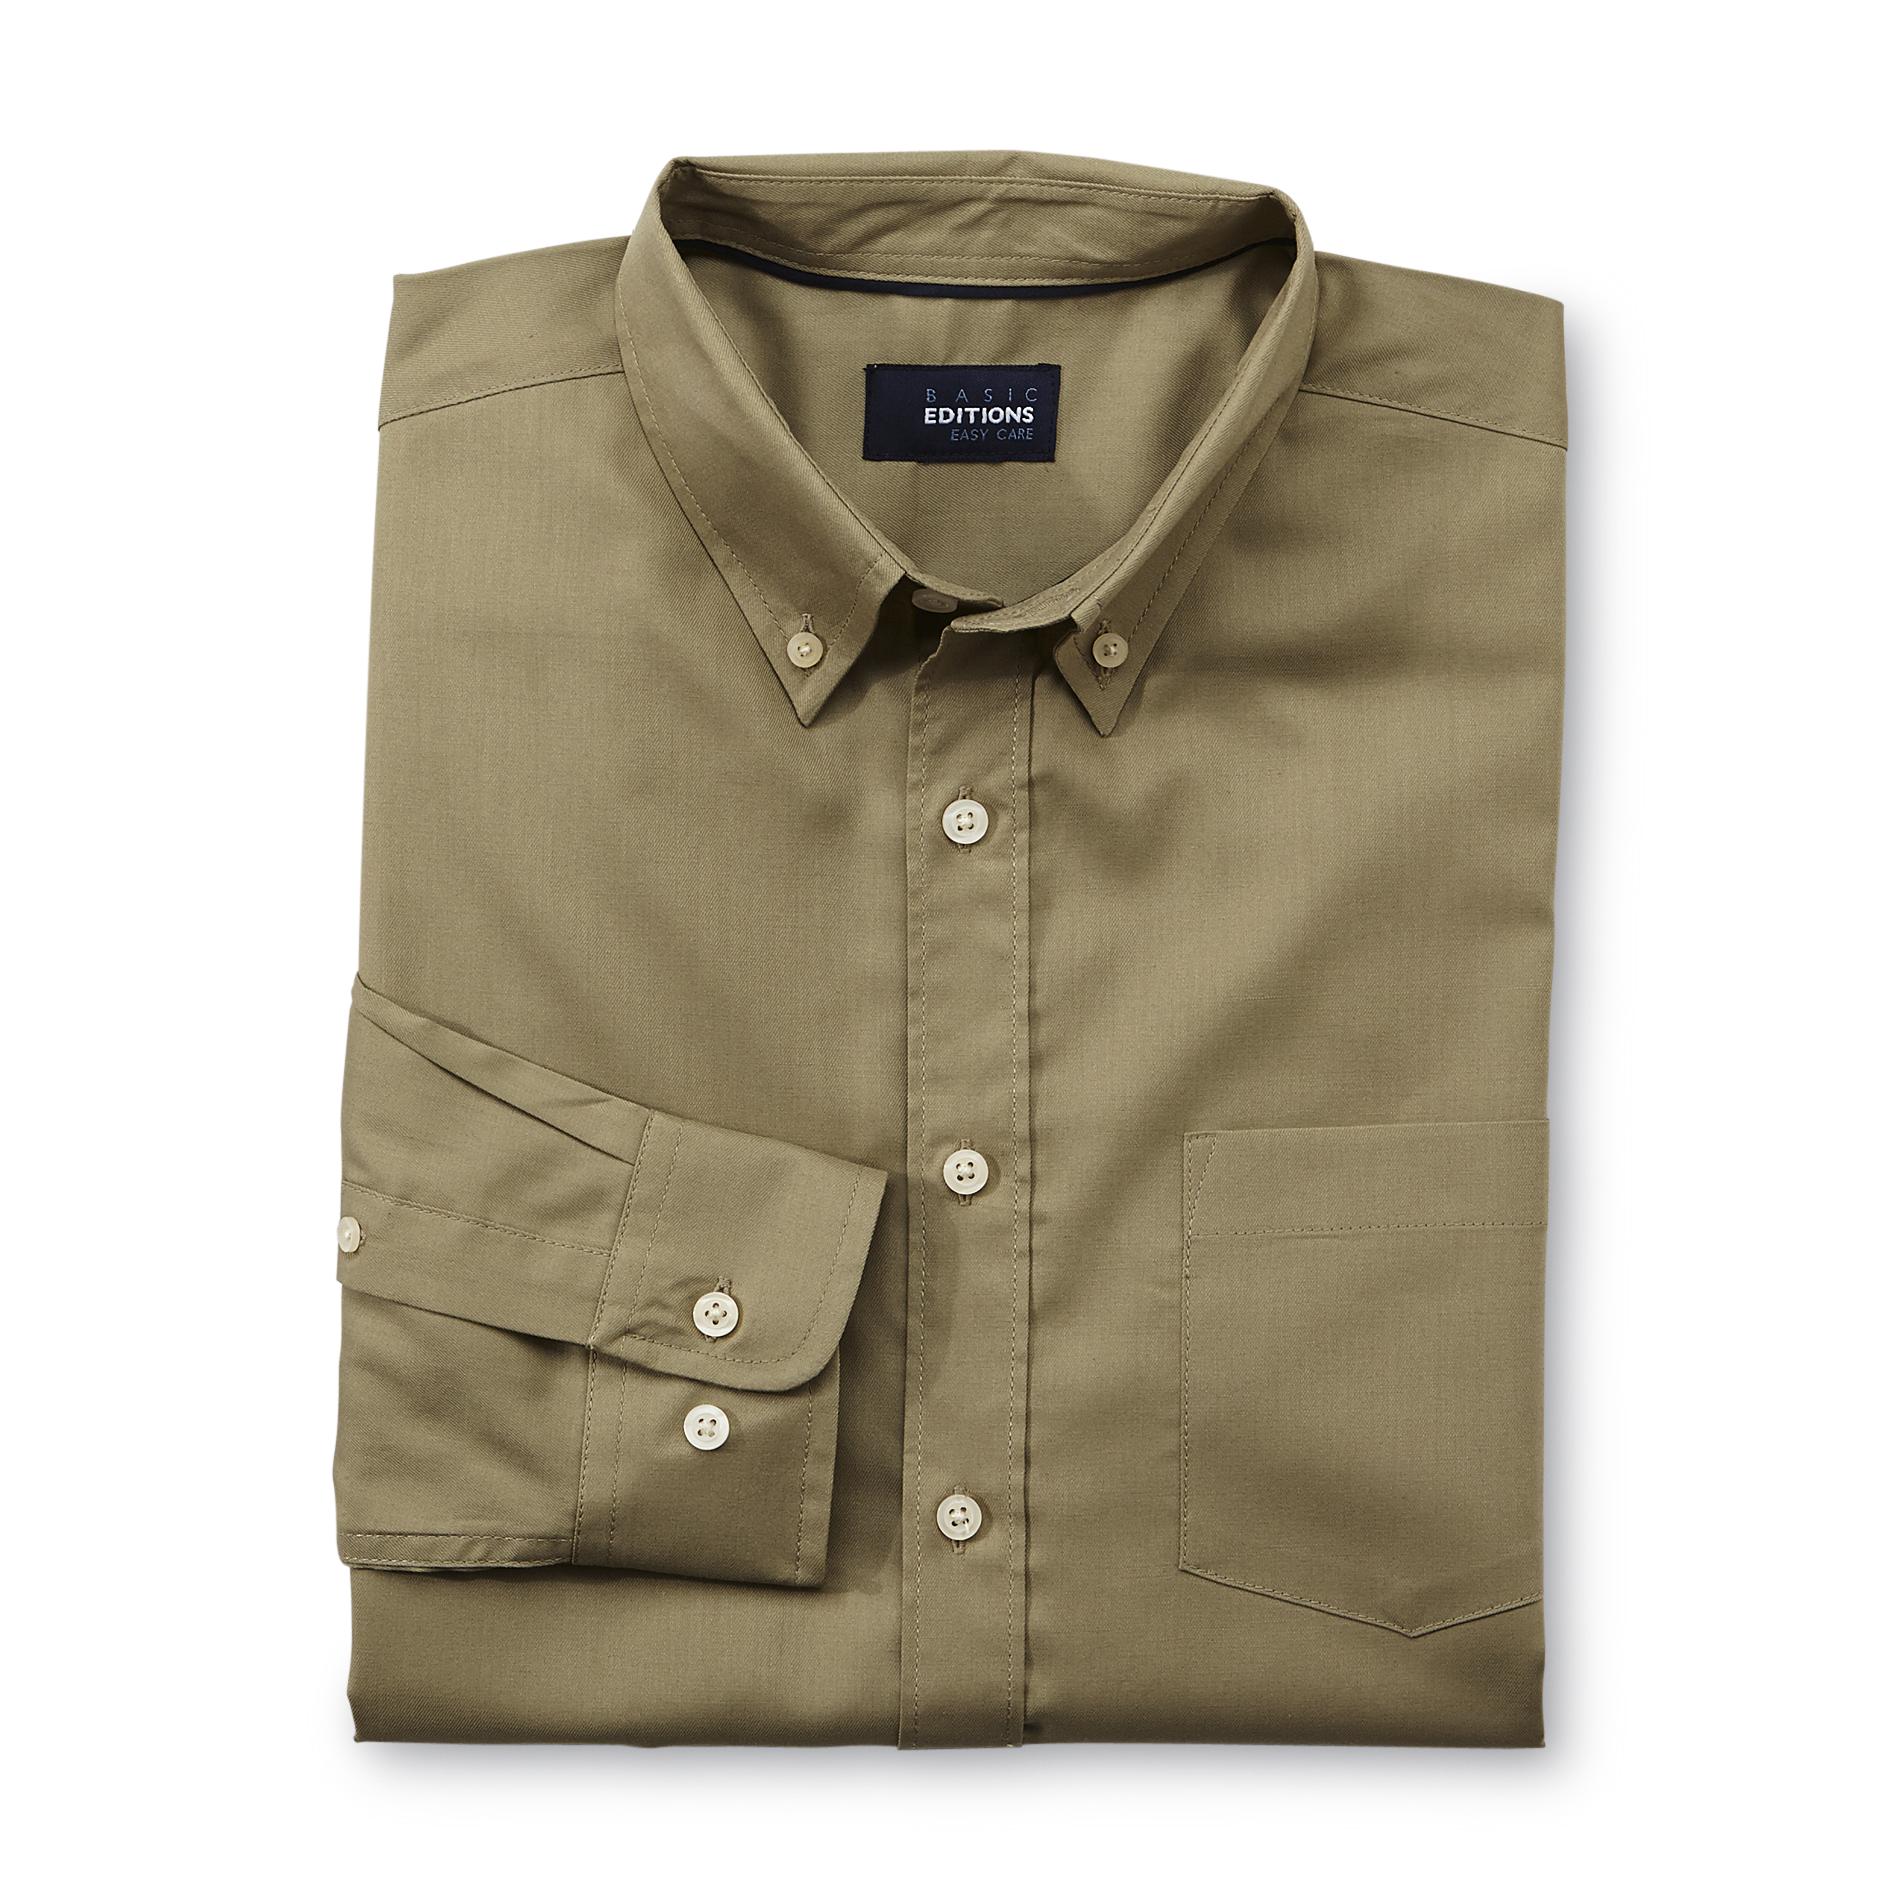 Basic Editions Men's Long-Sleeve Dress Shirt